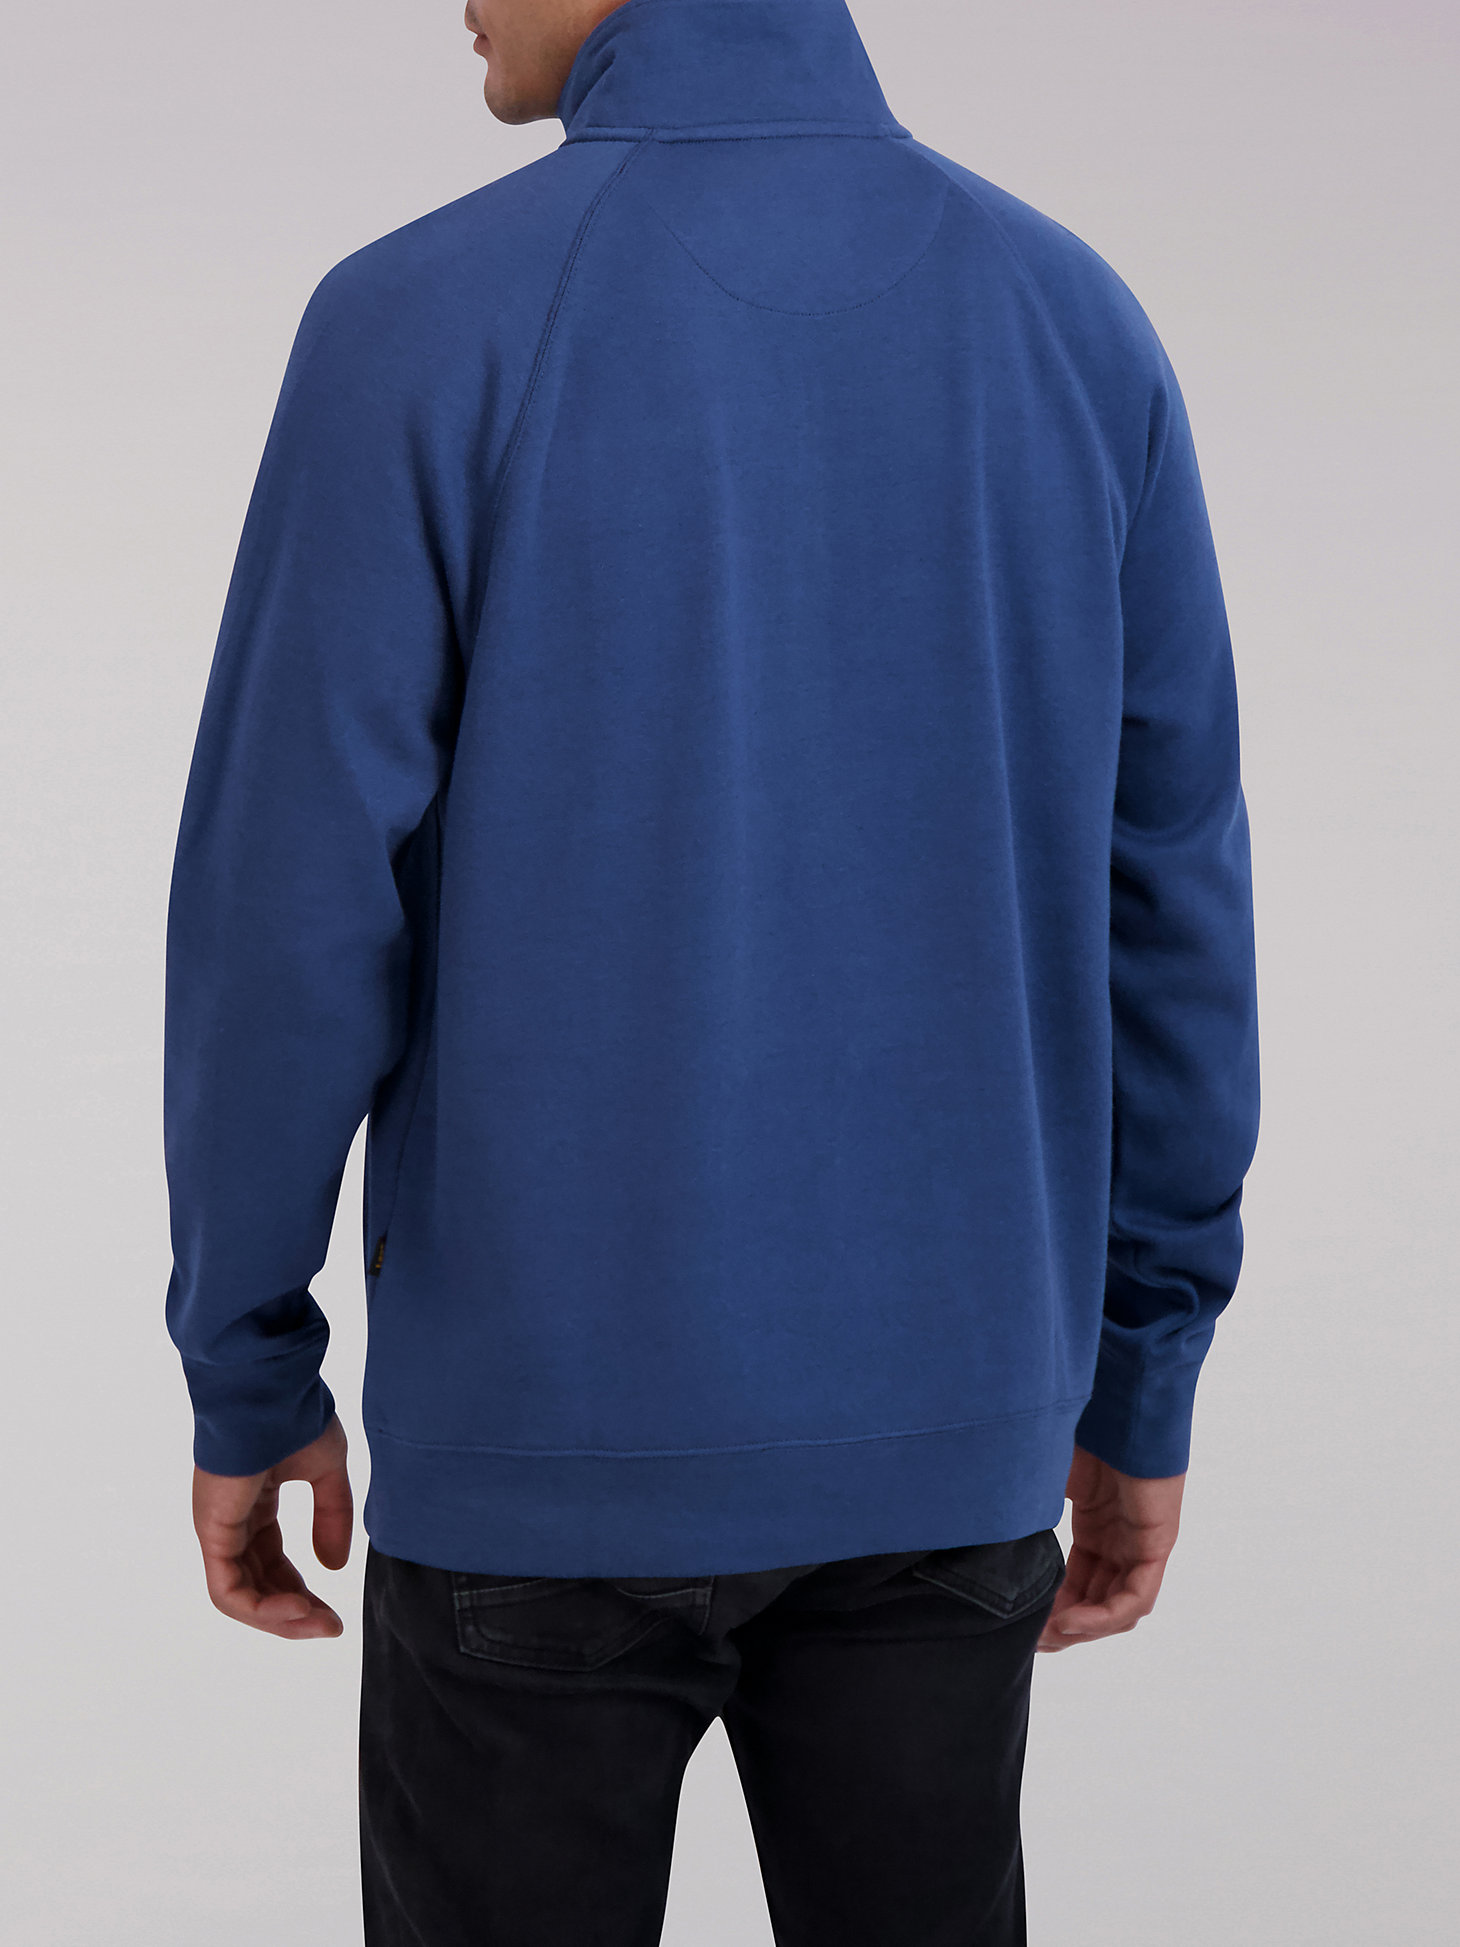 Men's Heavyweight Fleece Quarter Zip Sweater in Blue Denim alternative view 1